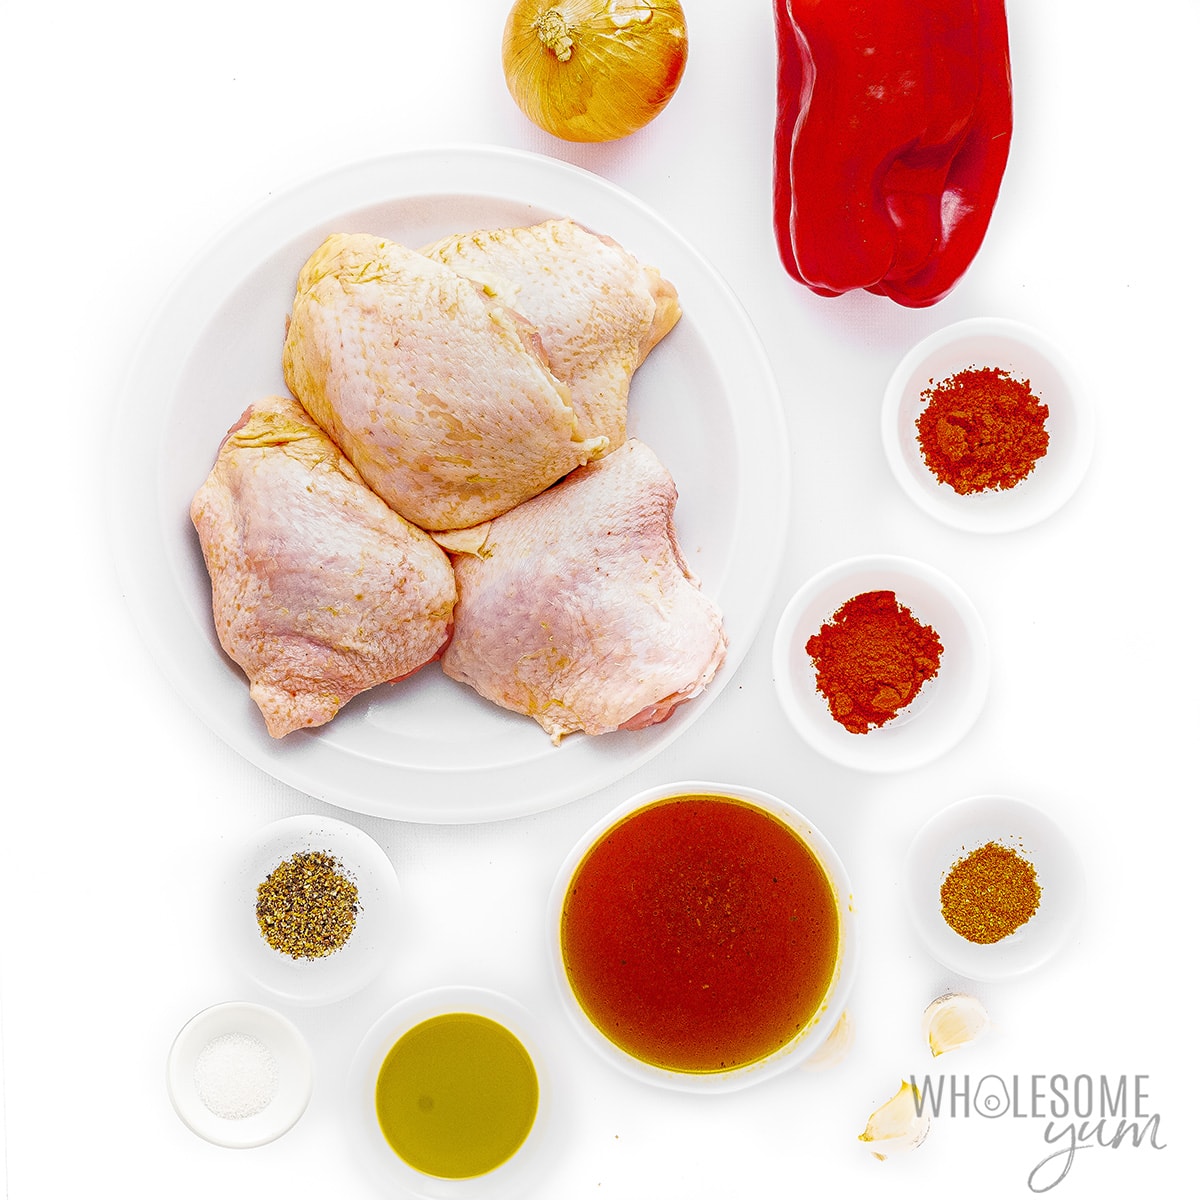 Chicken paprika recipe ingredients measured out.